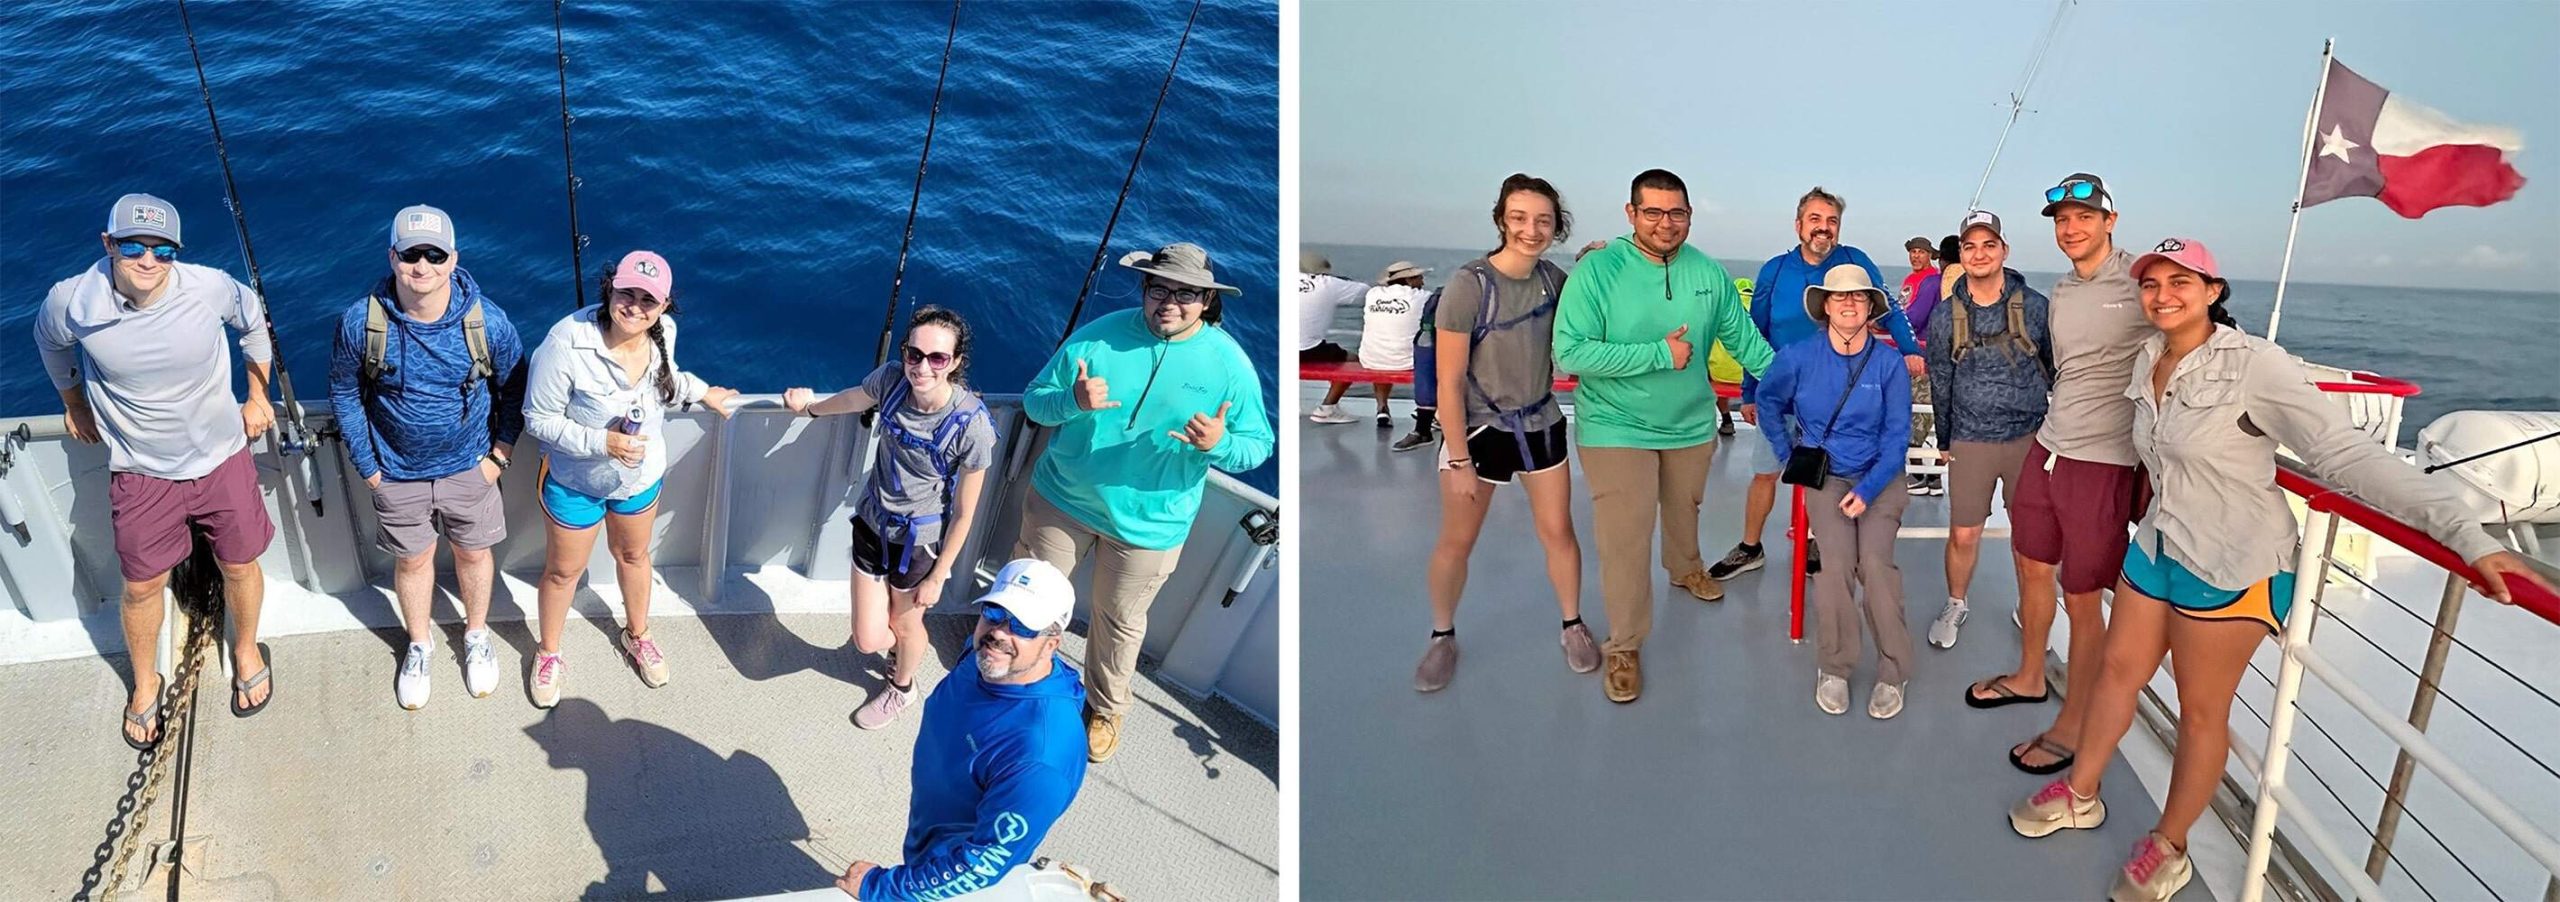 collage of Halff Corpus Christi employees sailing on boat in Port Aransas for deep-sea fishing trip